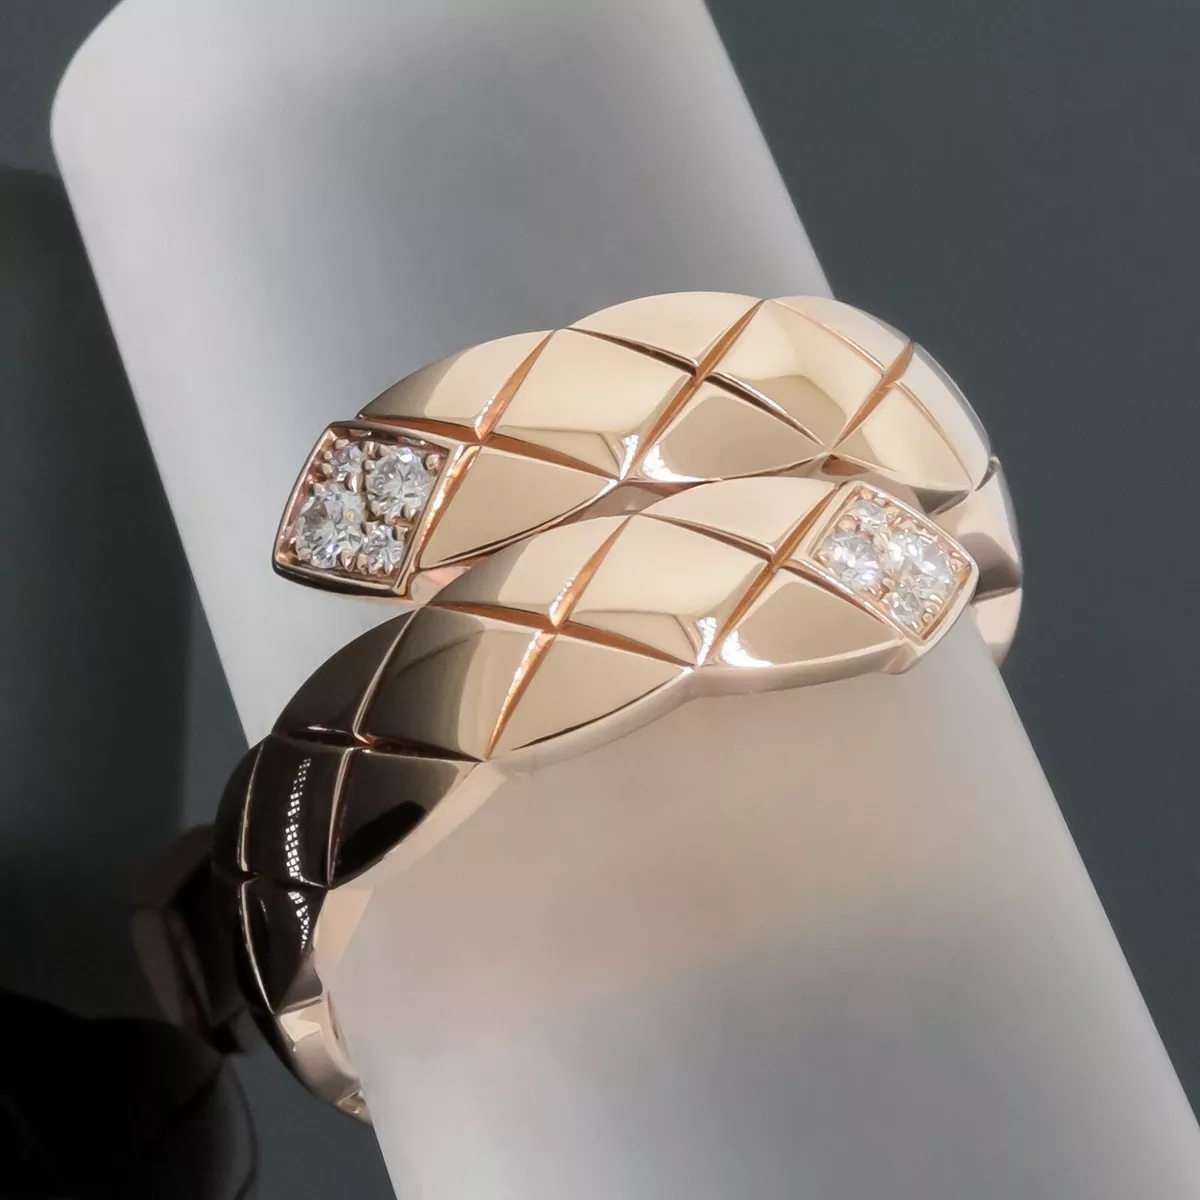 Chanel Coco Crush Toi et Moi Diamond Ring Size 5.75 Large Version